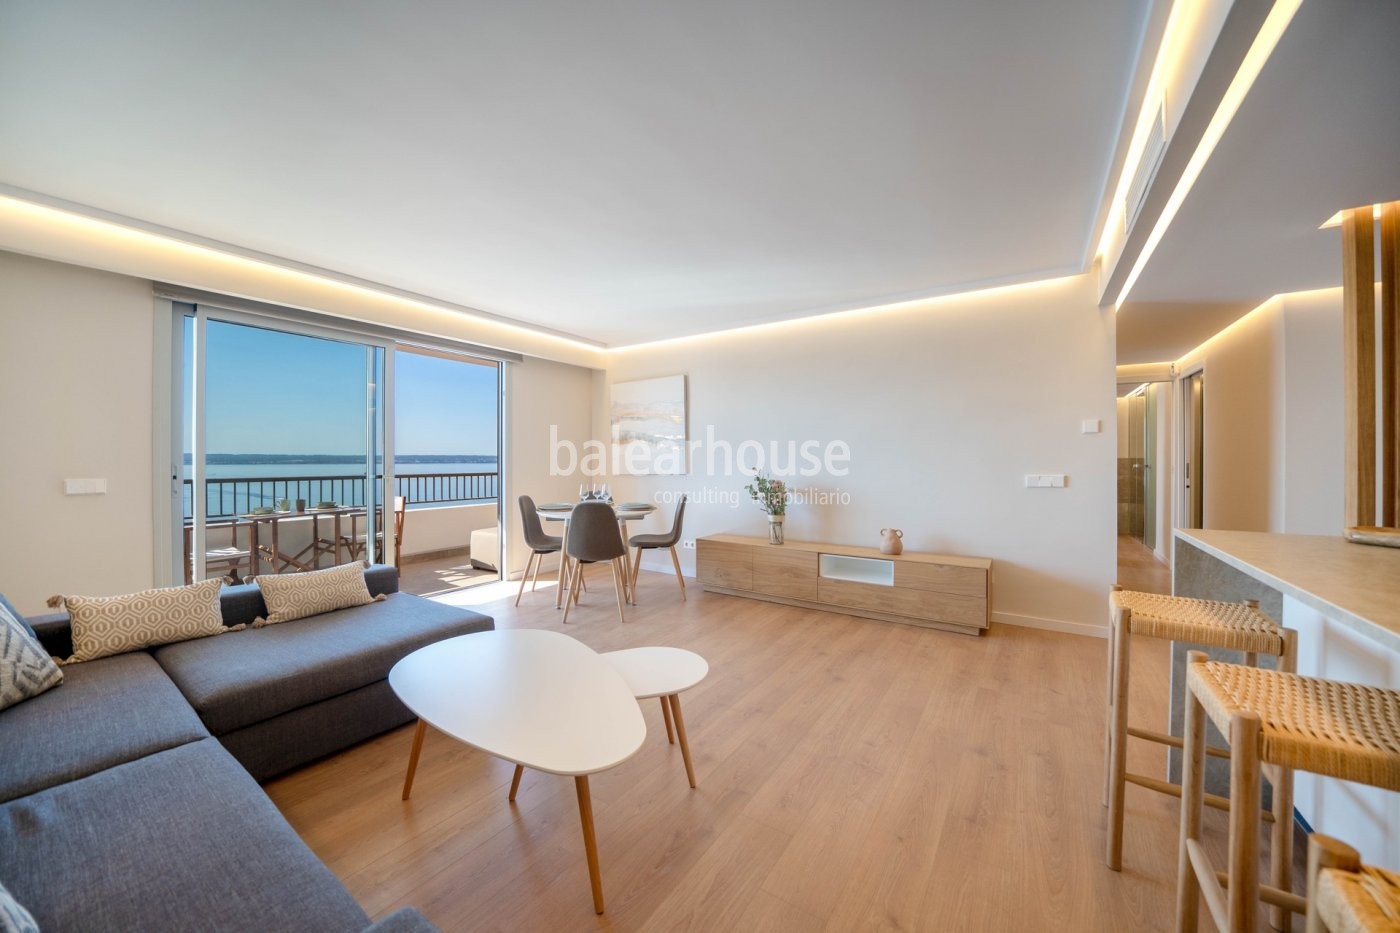 Atemberaubender Meerblick in diesem Penthouse in erster Reihe mit moderner Einrichtung in Palma.